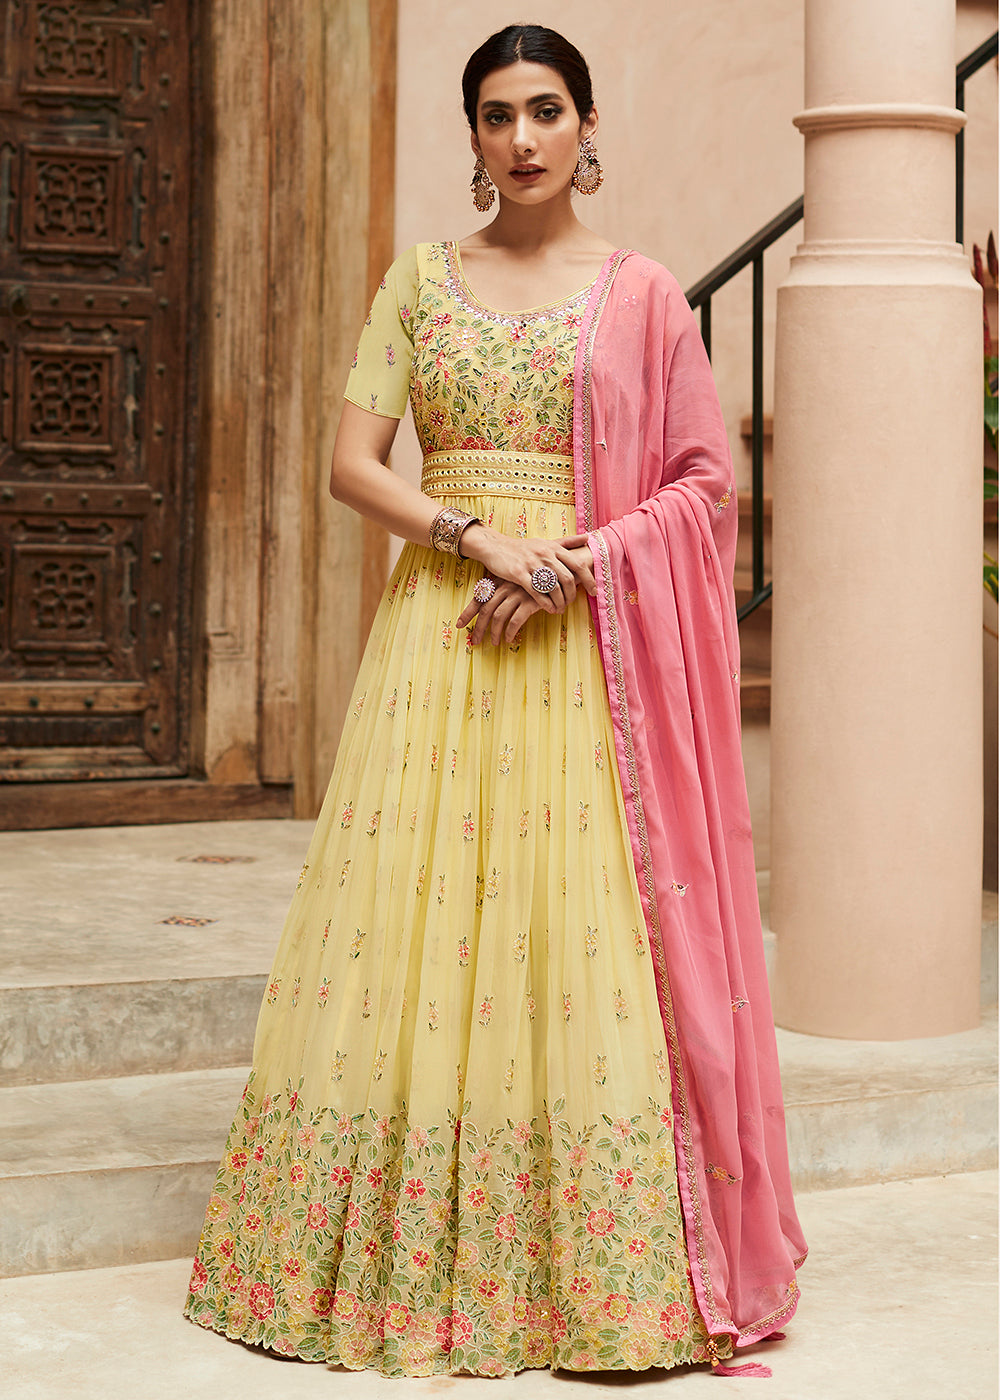 Buy Now Premium Georgette Light Yellow Embellished Anarkali Dress Online in USA, UK, Australia, New Zealand, Canada & Worldwide at Empress Clothing. 